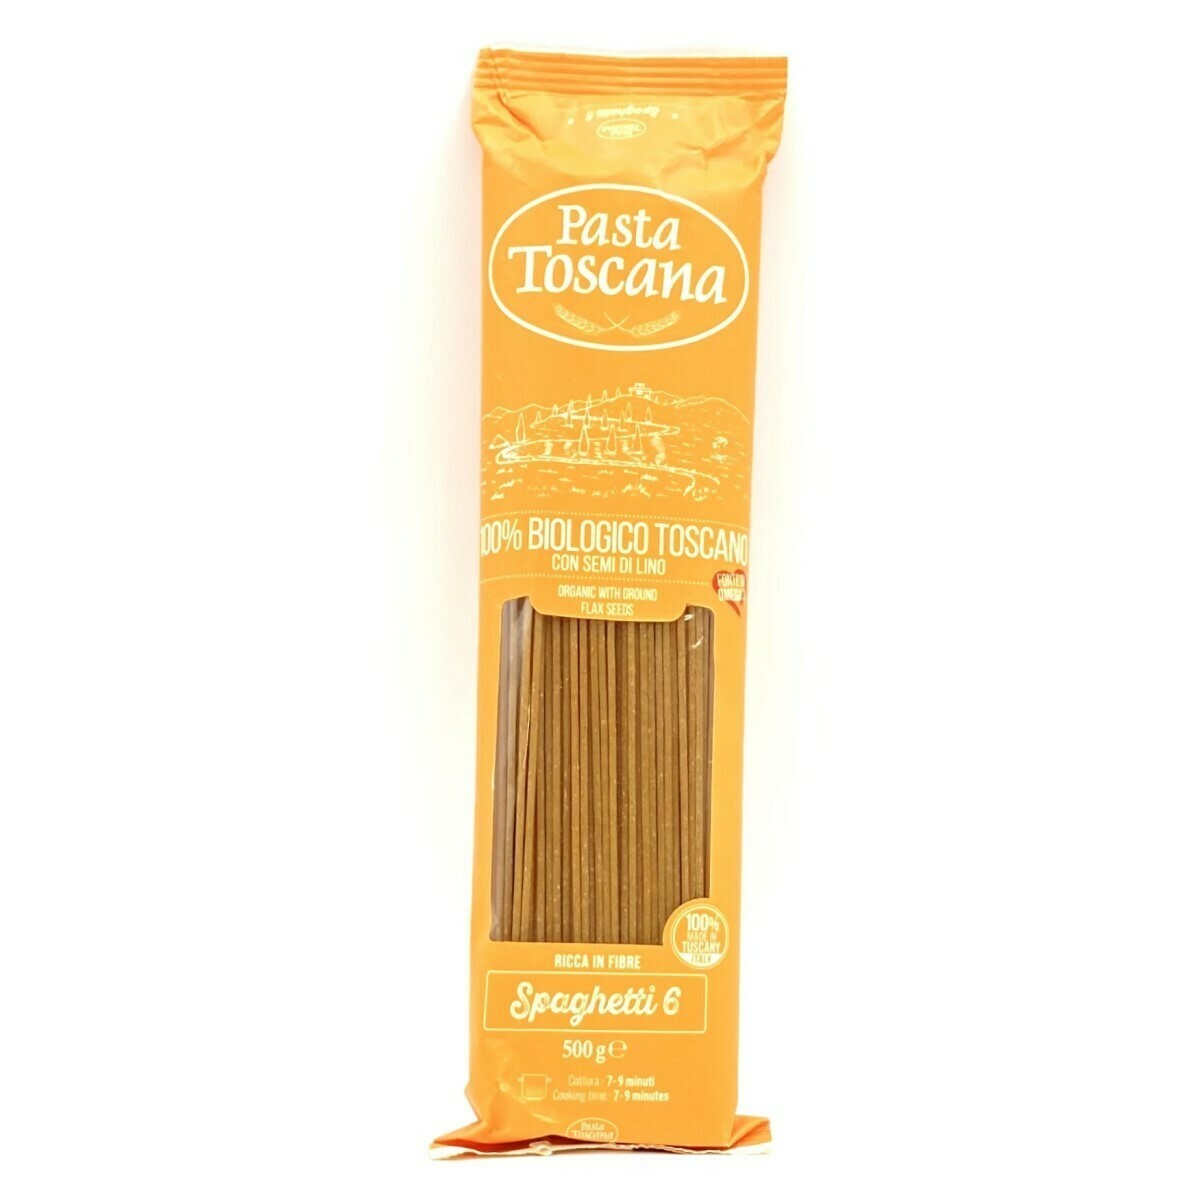 Pasta Toscana Organic Spaghetti 6 with Flax Seeds